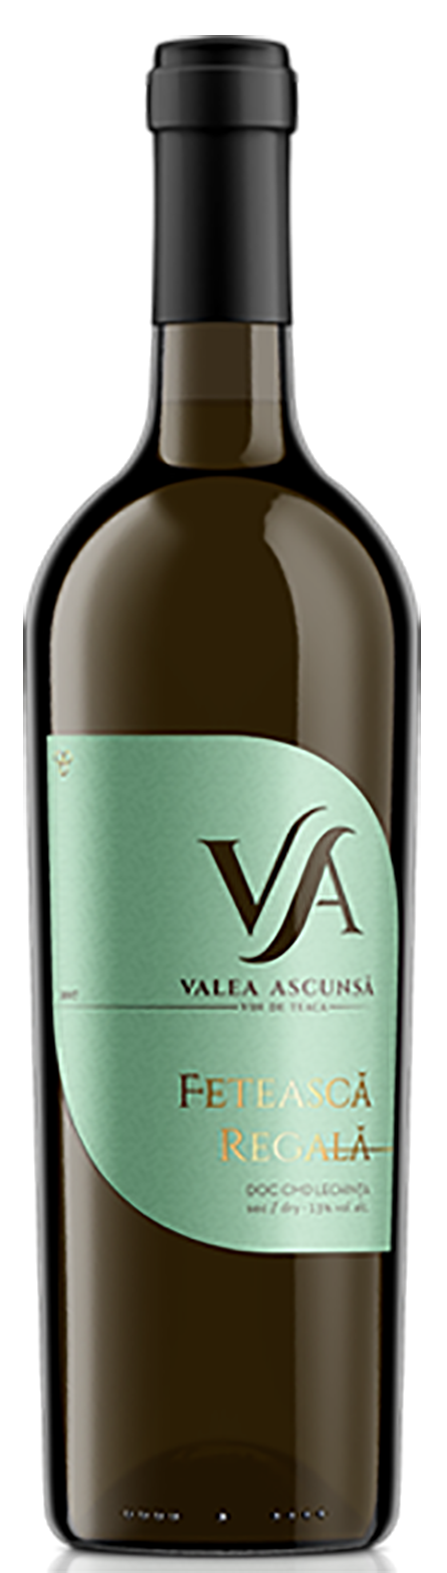 Vin alb - Valea Ascunsa, Feteasca regala, sec, 2017 | Valea Ascunsa